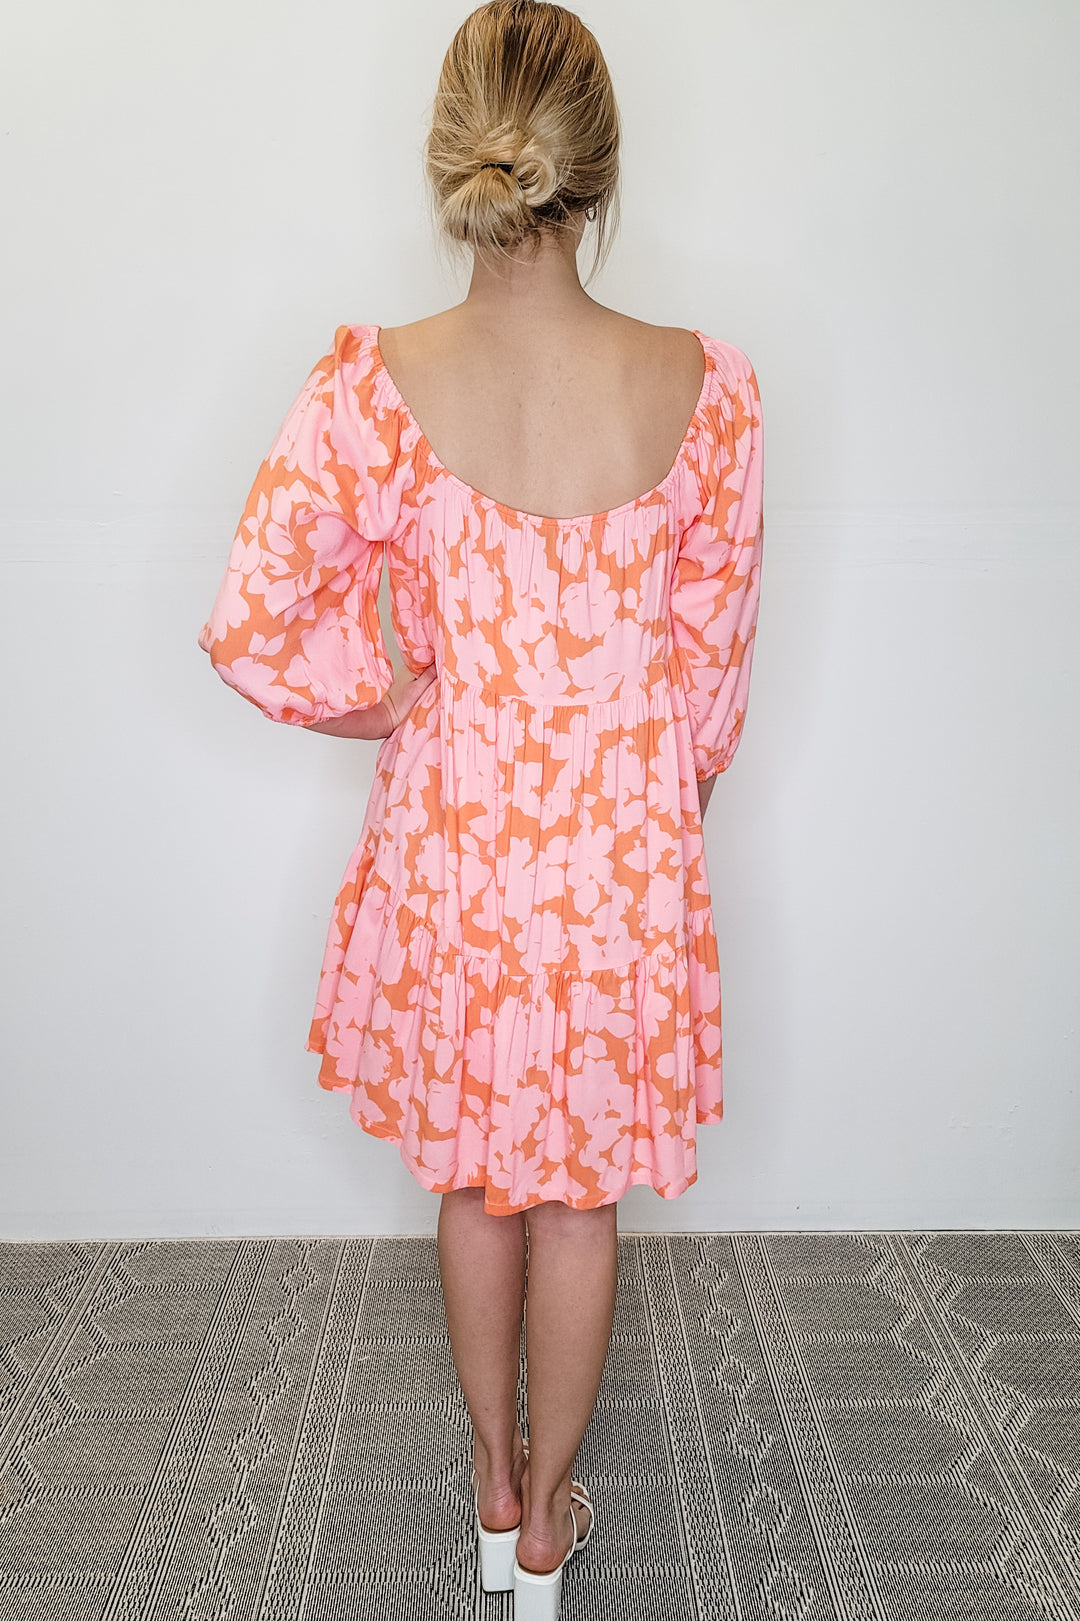 Sanctuary Pink & Orange Floral LS Mini Dress